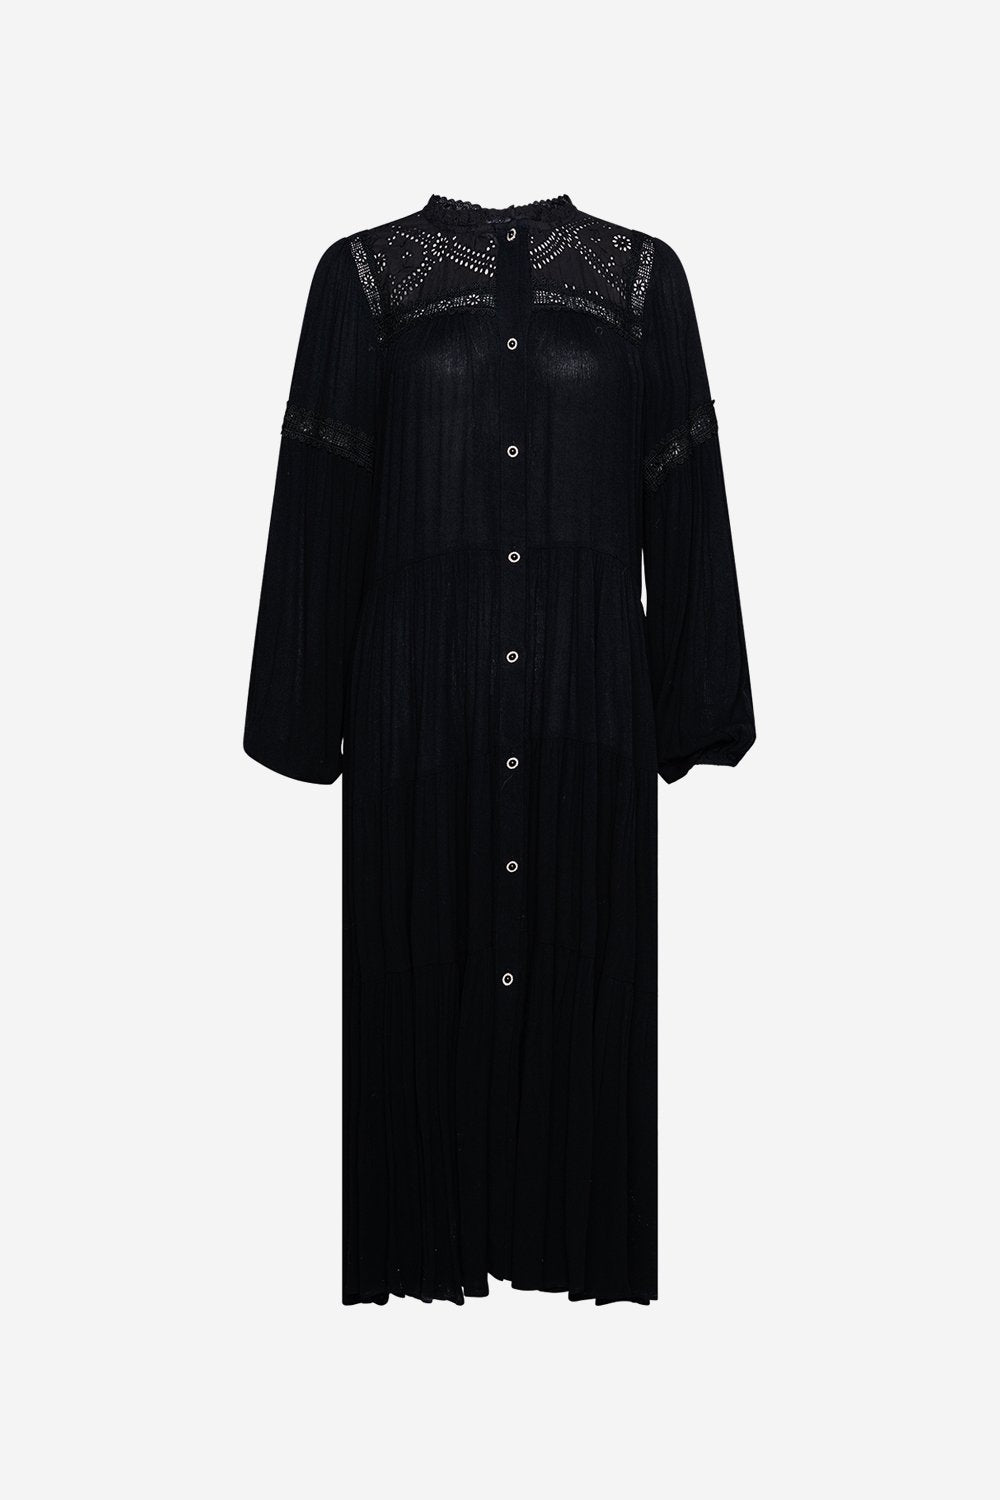 Shelli Lace Dress Black